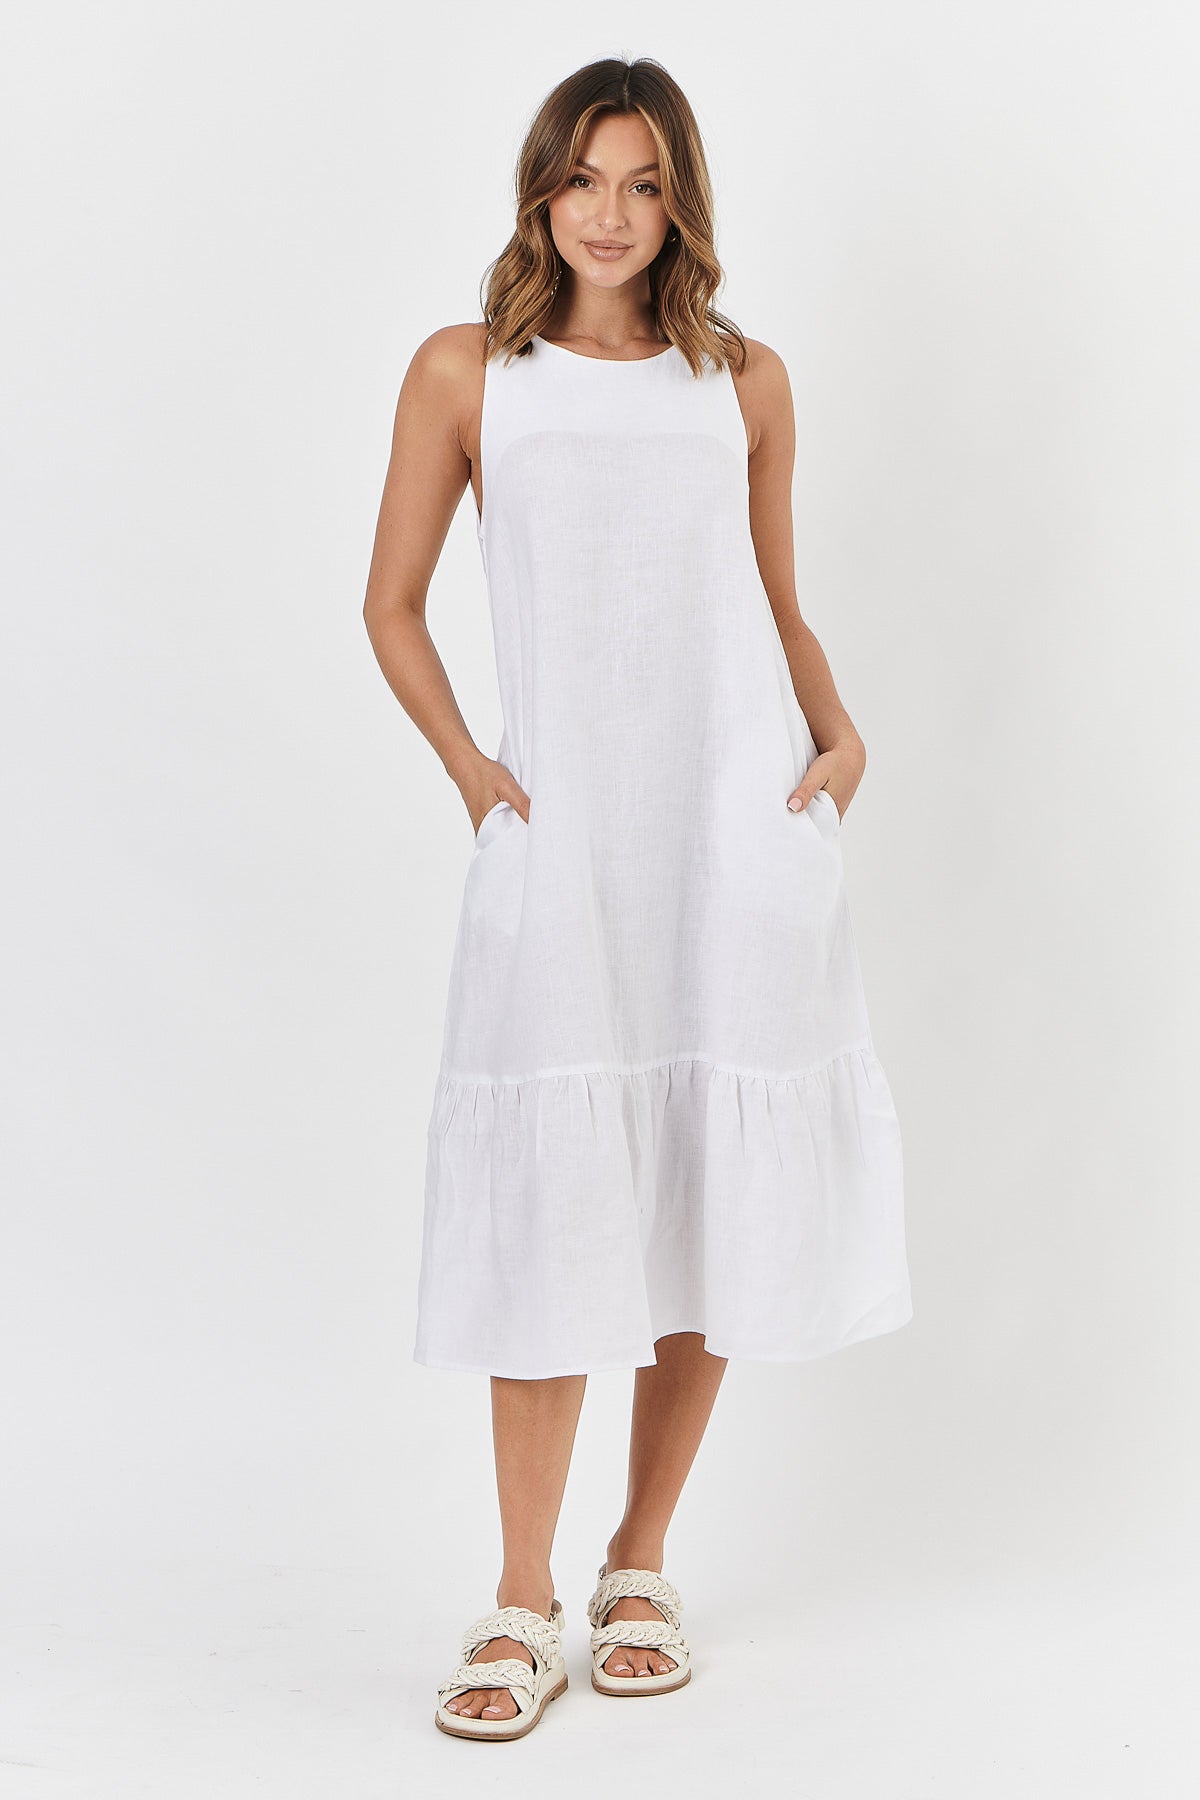 Sleeveless A-Line Dress - White